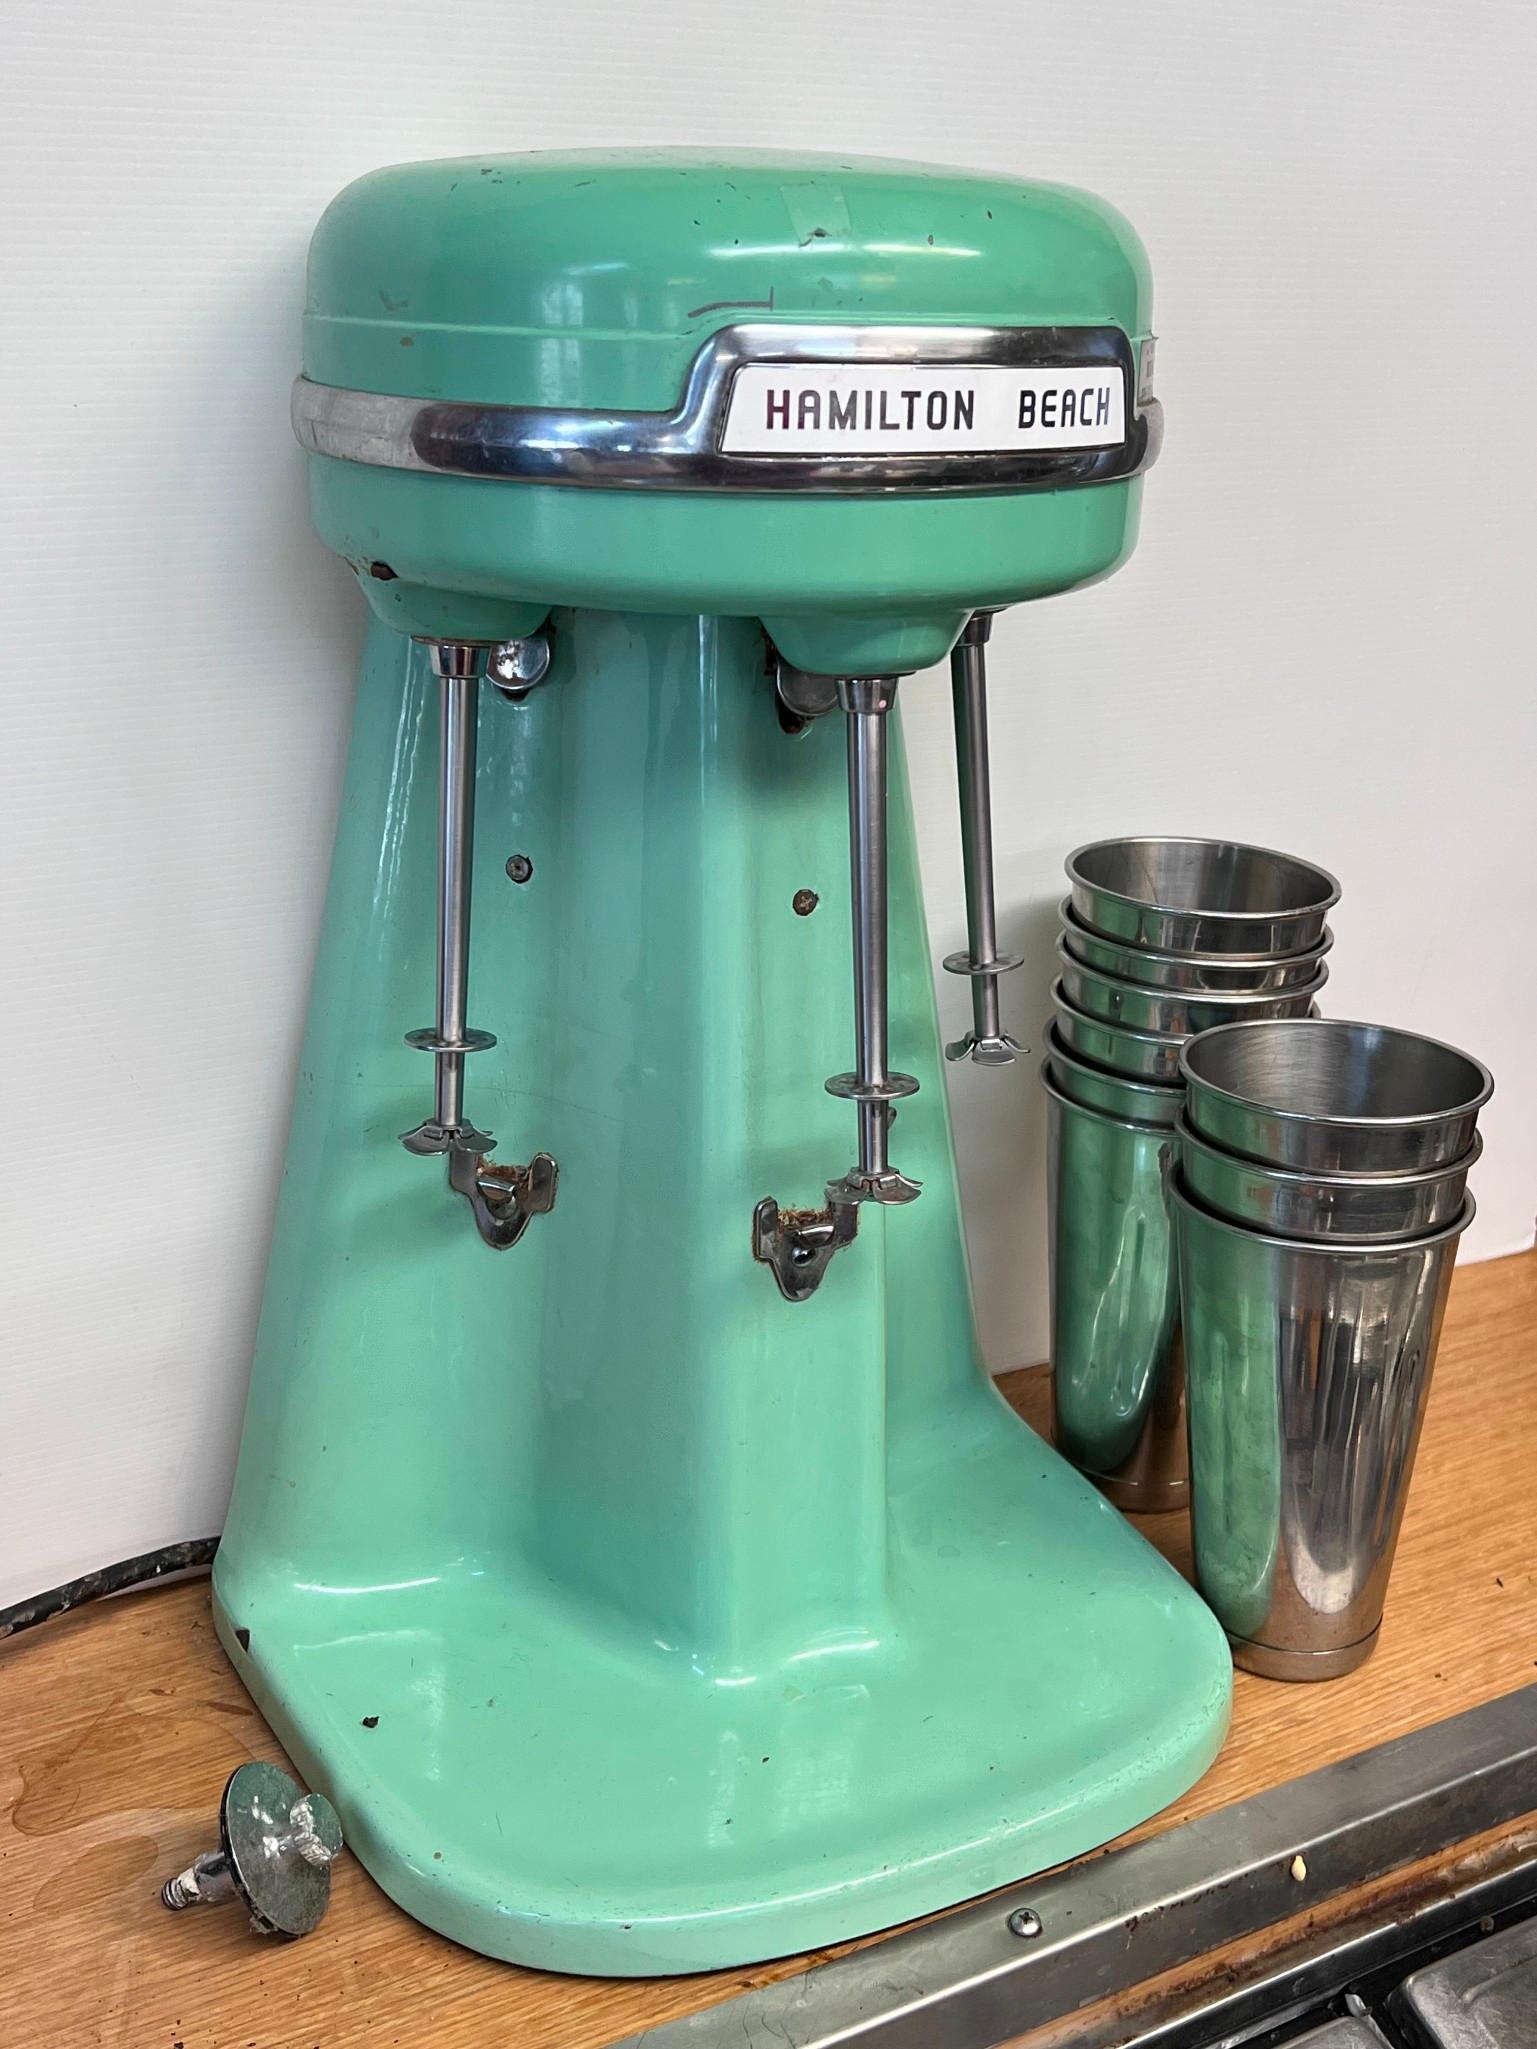 Sold at Auction: Vintage Hamilton Beach Milkshake Mixer